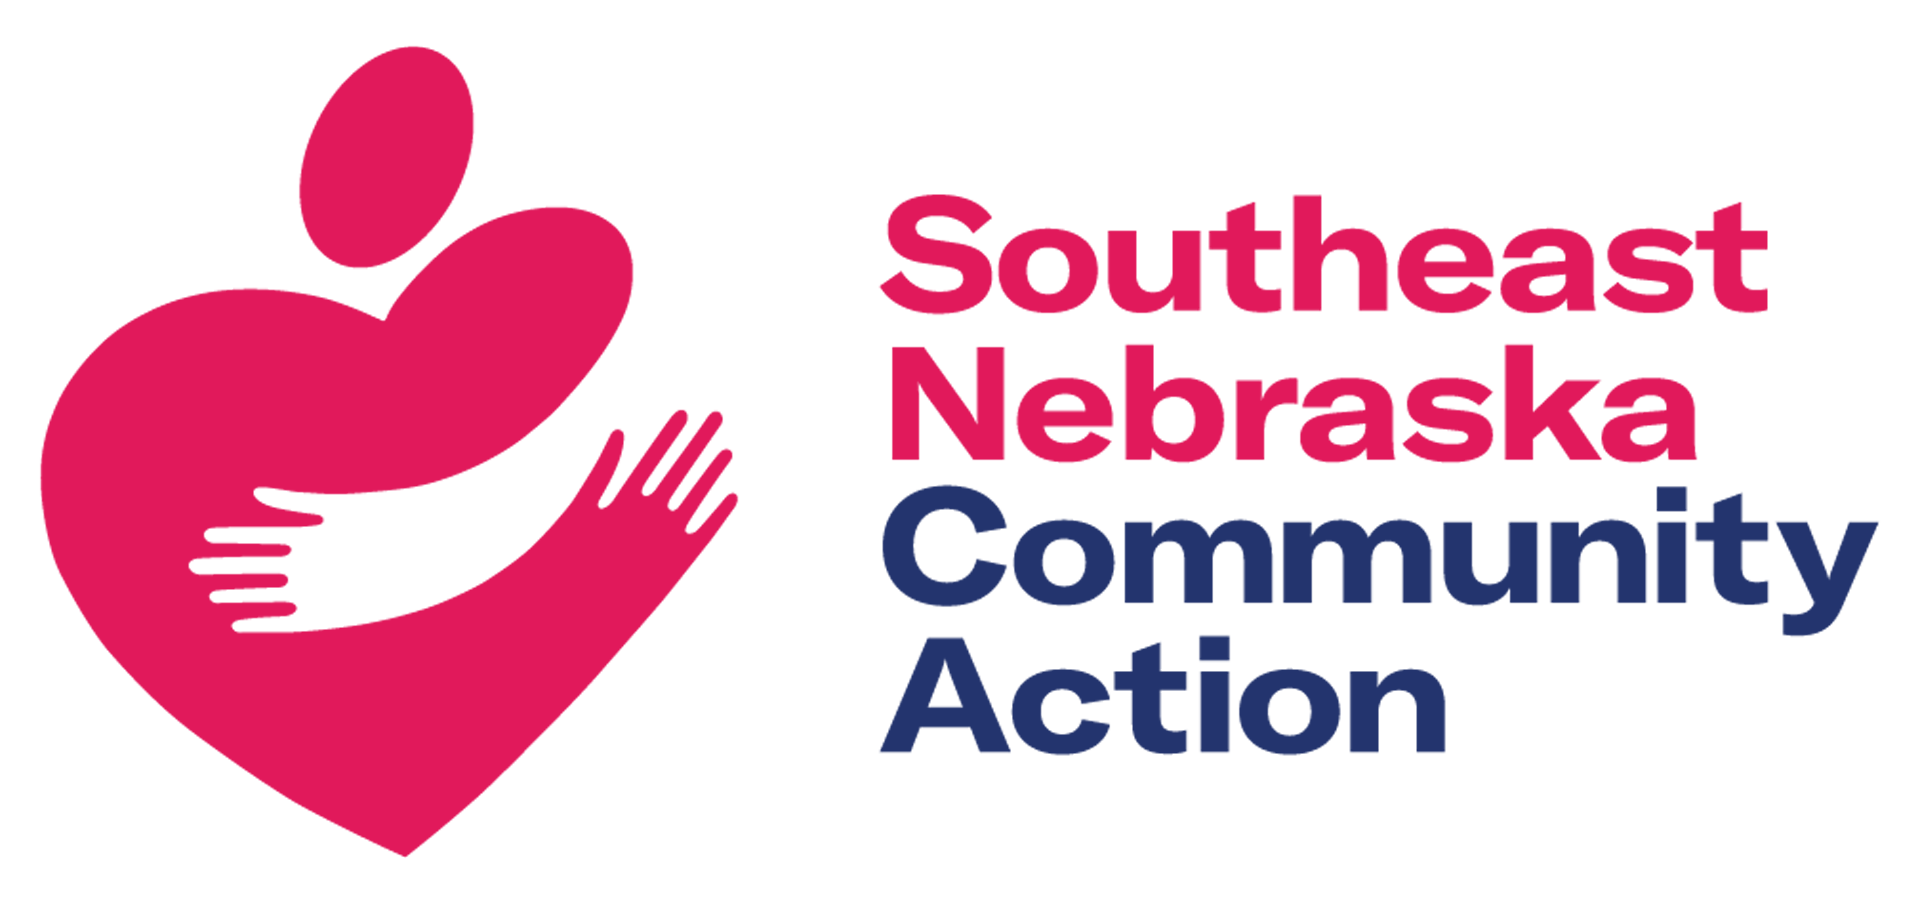 SENCA Southeast Nebraska Community Action Network